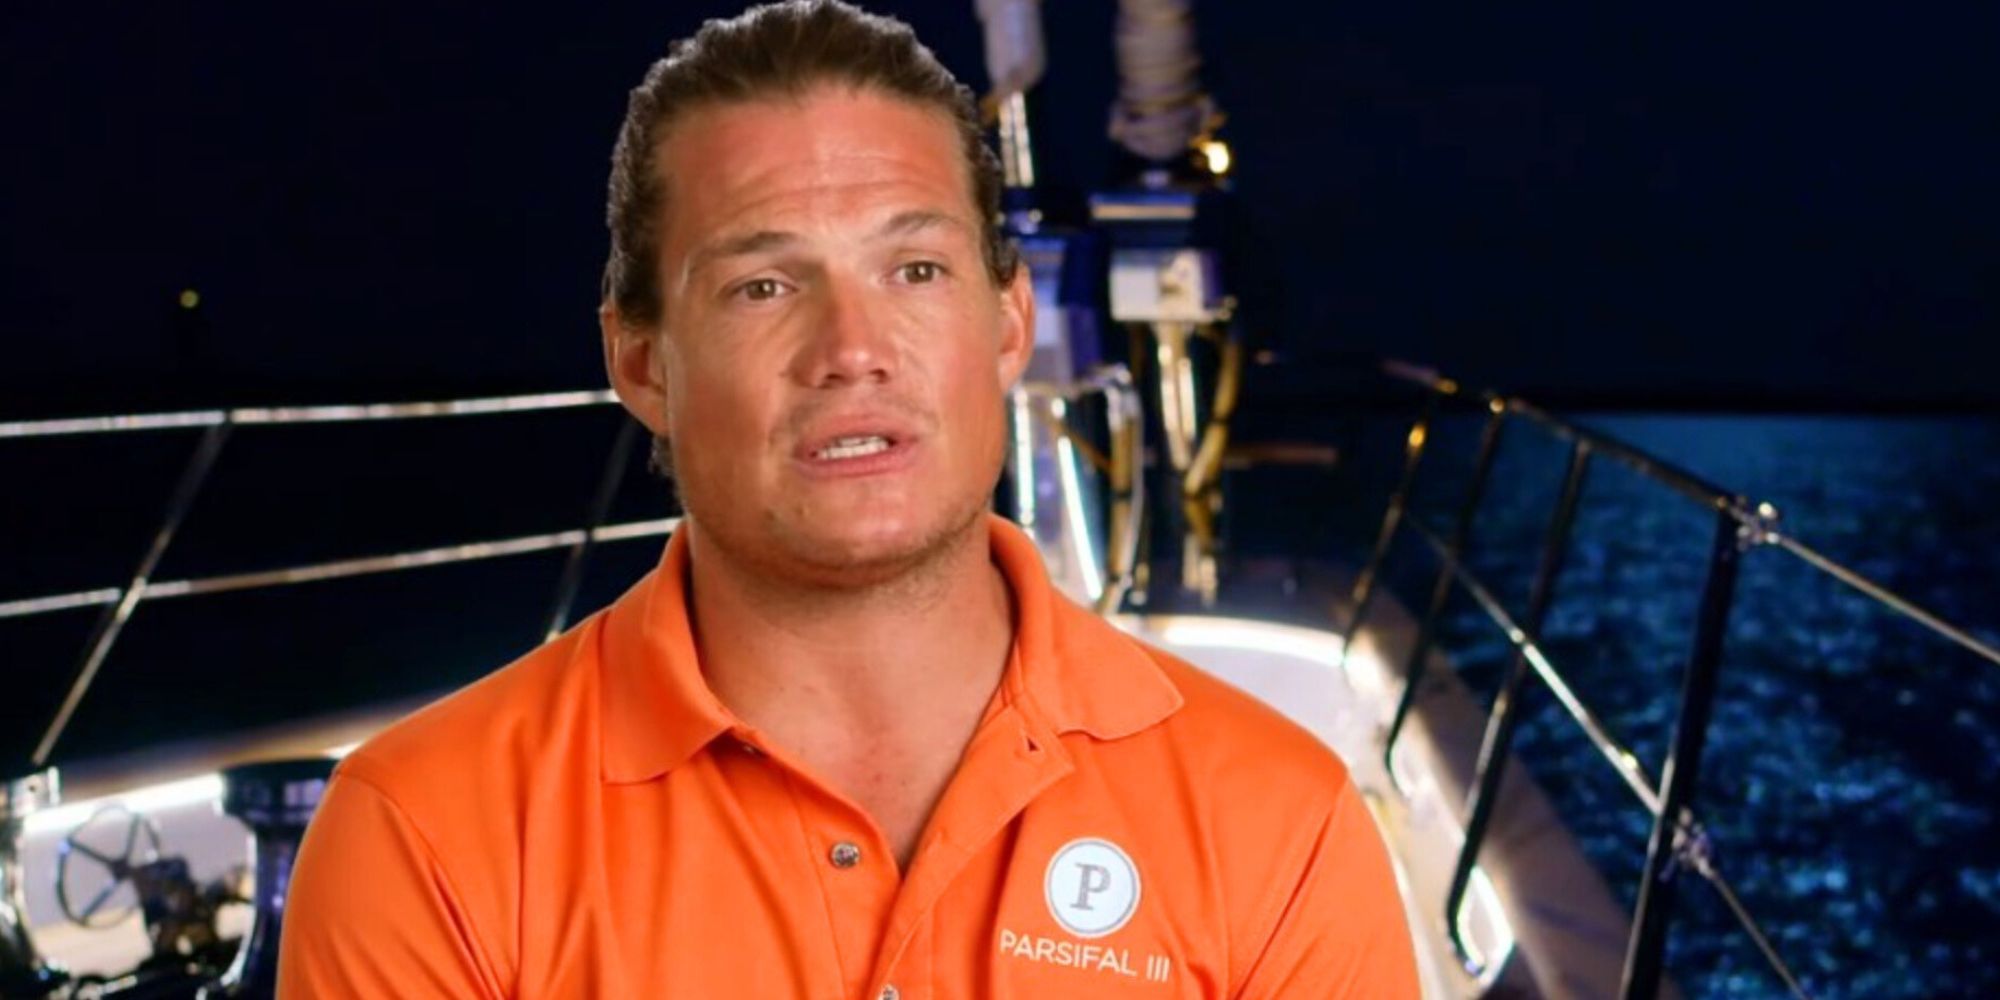 Gary King from Below Deck Sailing Yacht from Season 3 in orange shirt